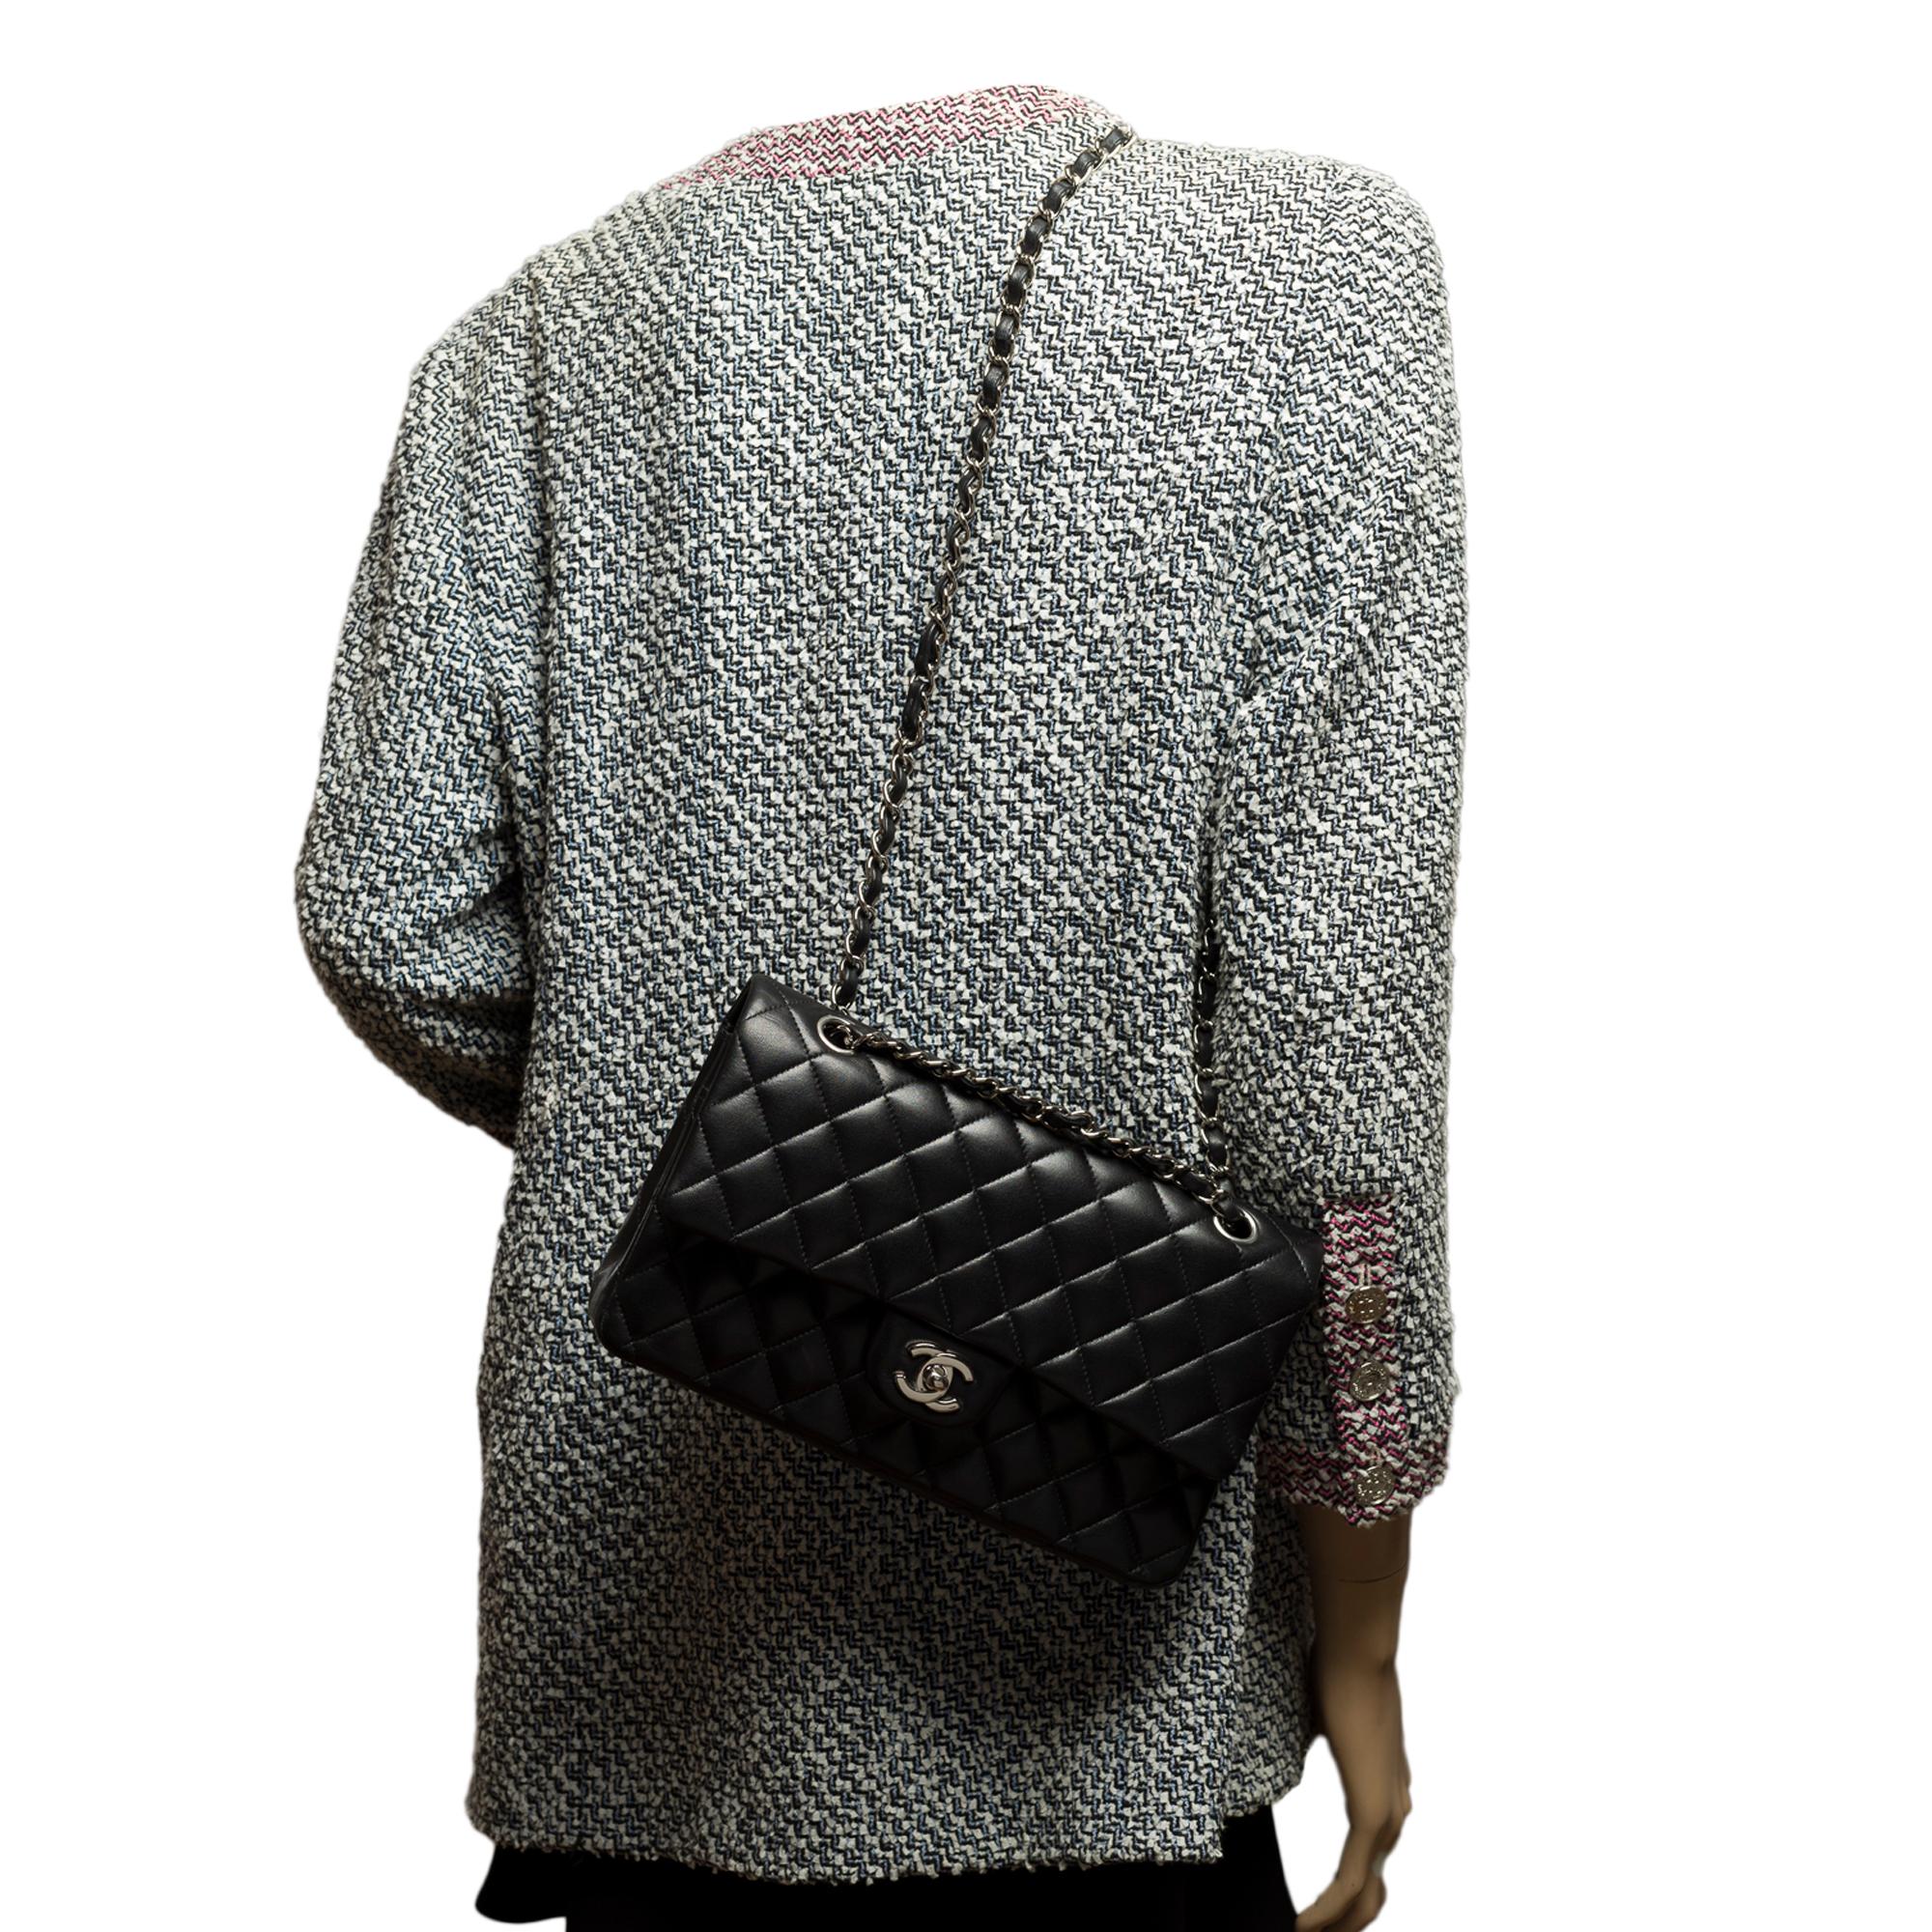 Chanel Timeless Medium 25cm double flap shoulder bag in black lambskin, SHW 8